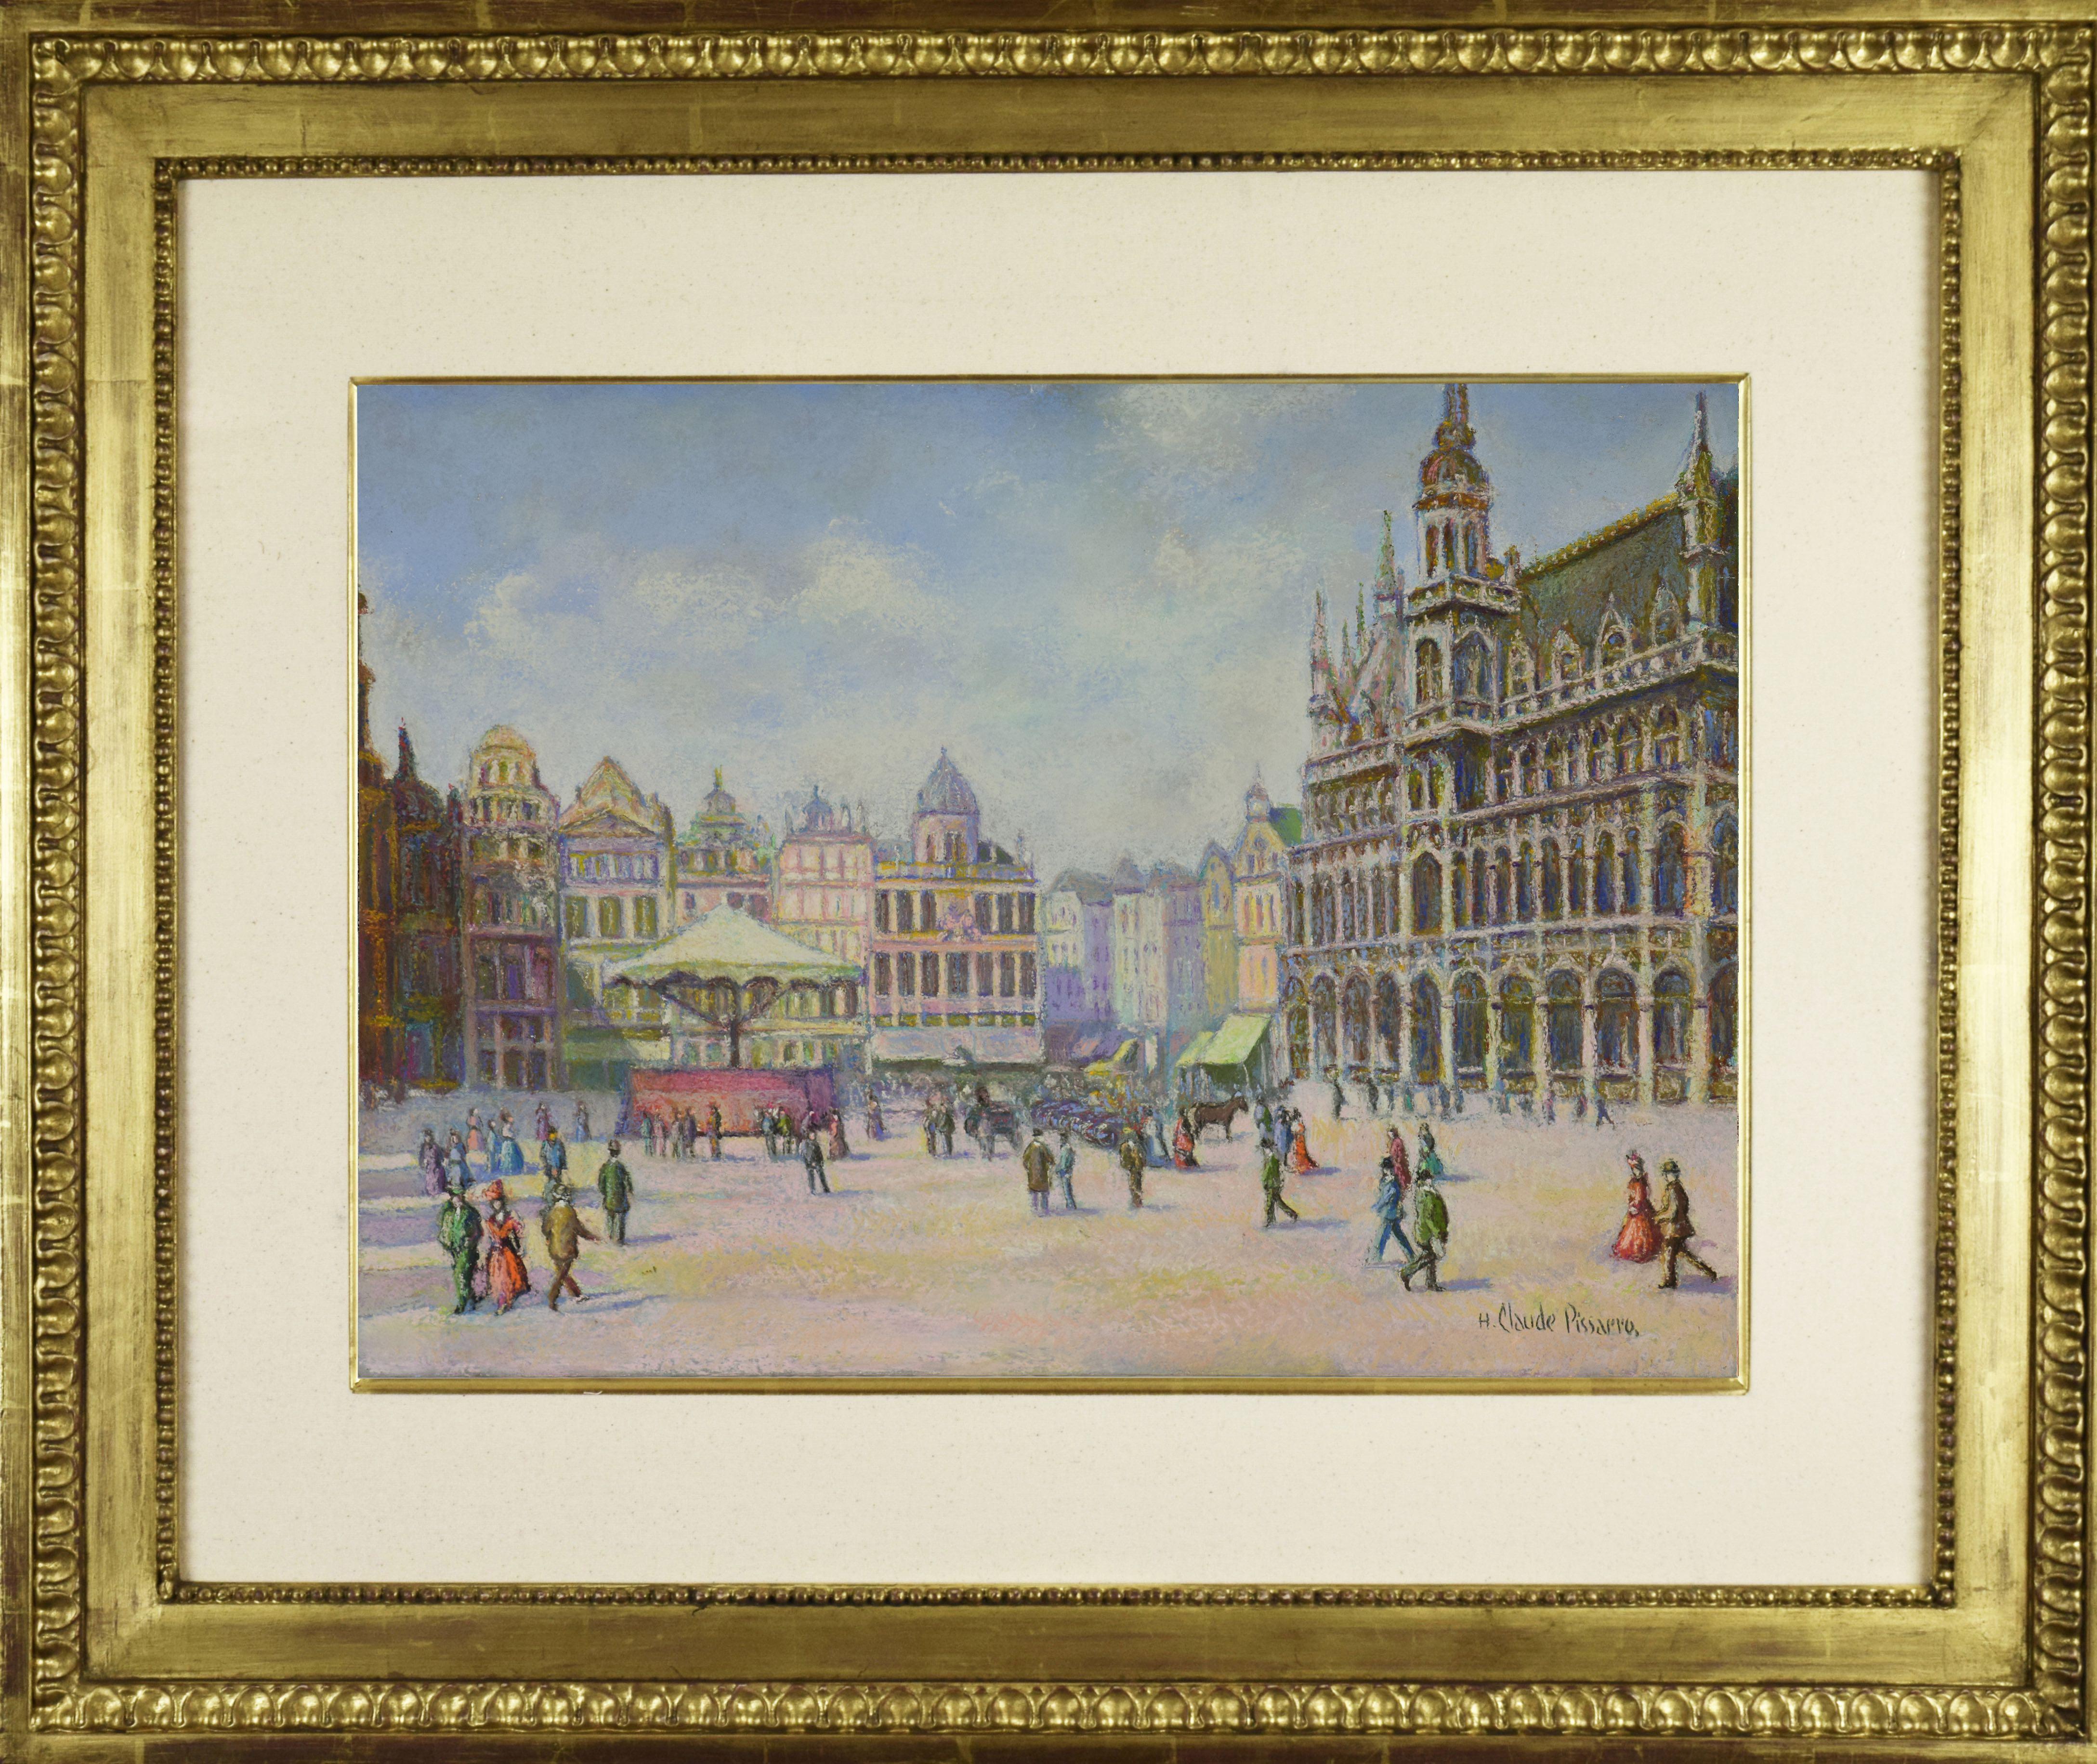 La Grande Place (Bruxelles) by H. Claude Pissarro - Pastel work on paper - Art by Hughes Claude Pissarro